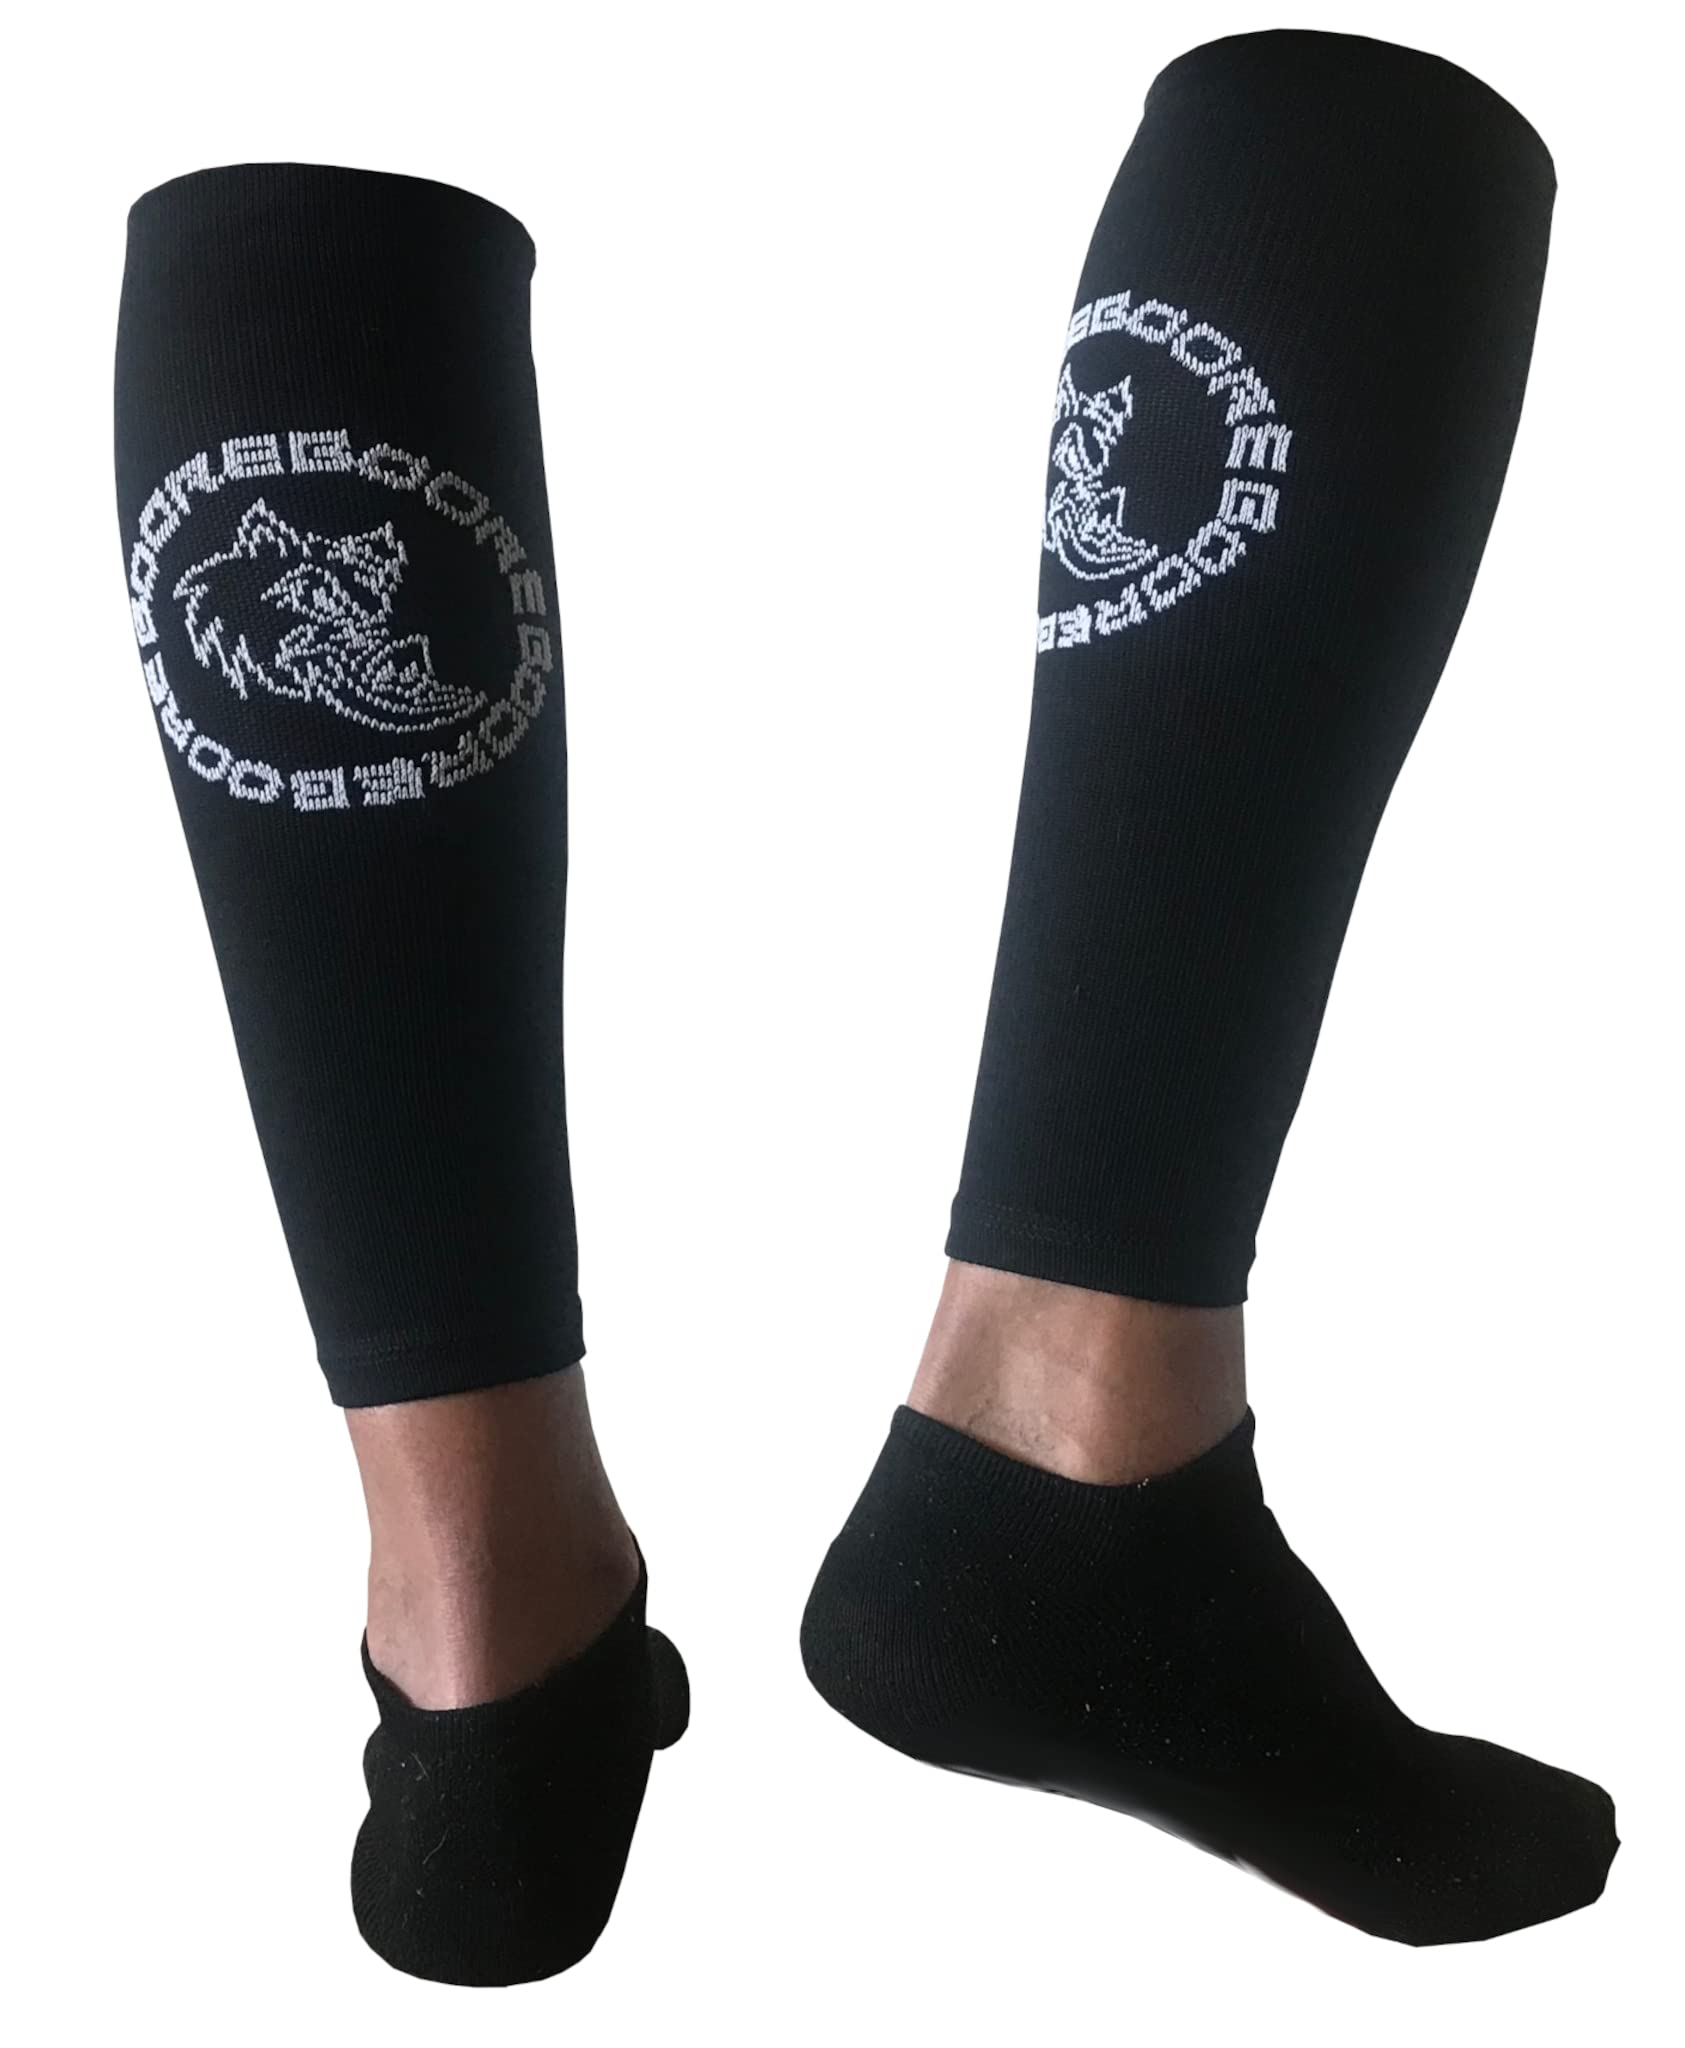  Calf Brace Leg Compression Sleeves For Men & Women